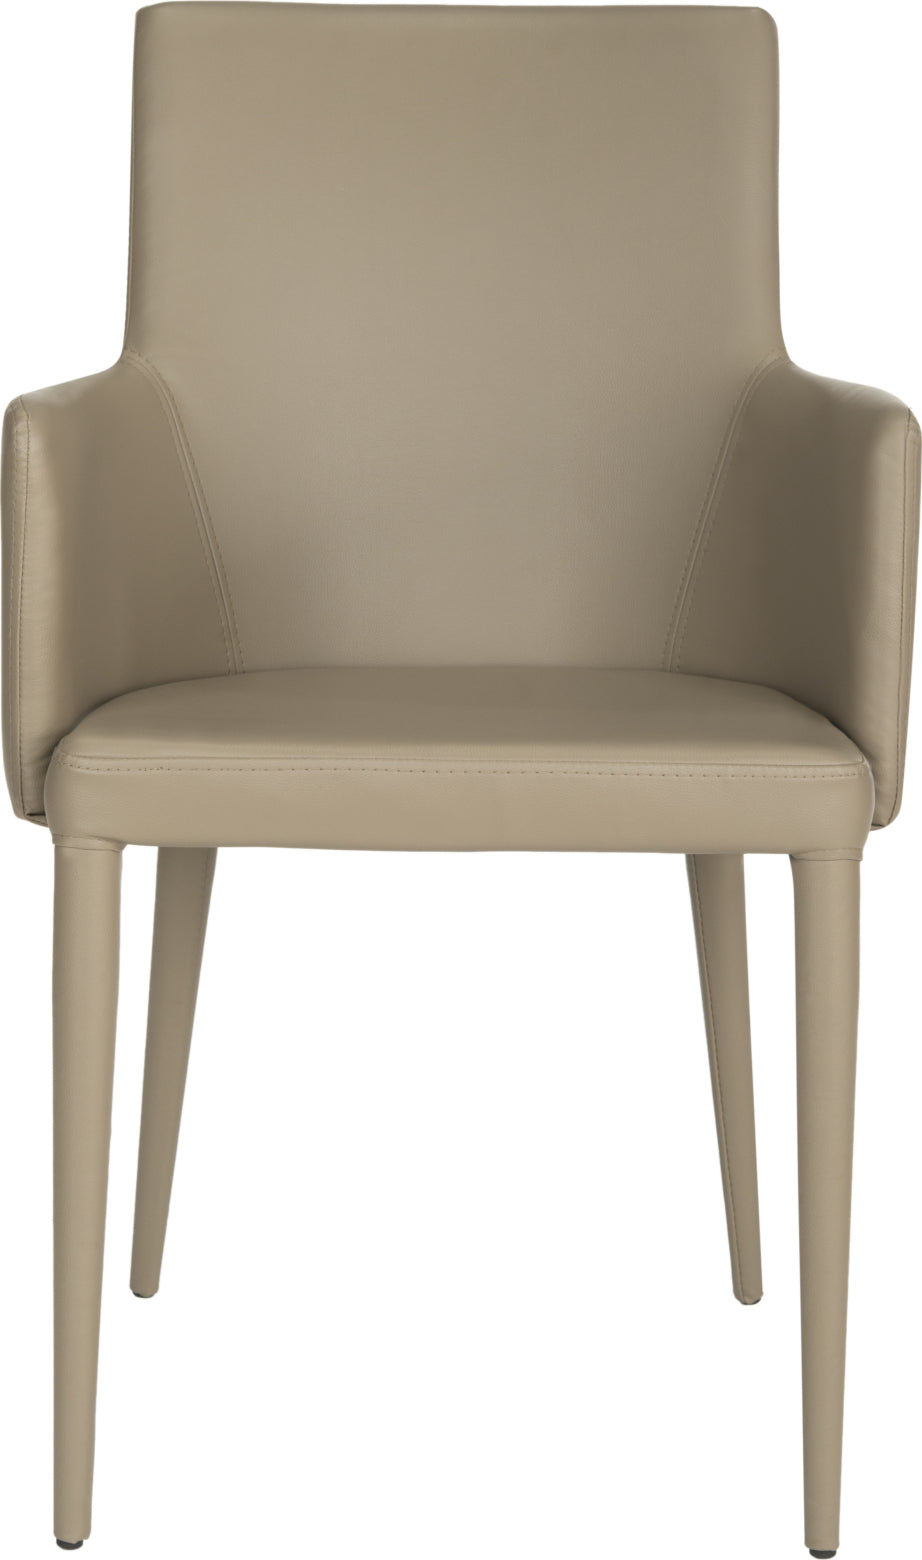 Safavieh Summerset Arm Chair Taupe Furniture main image